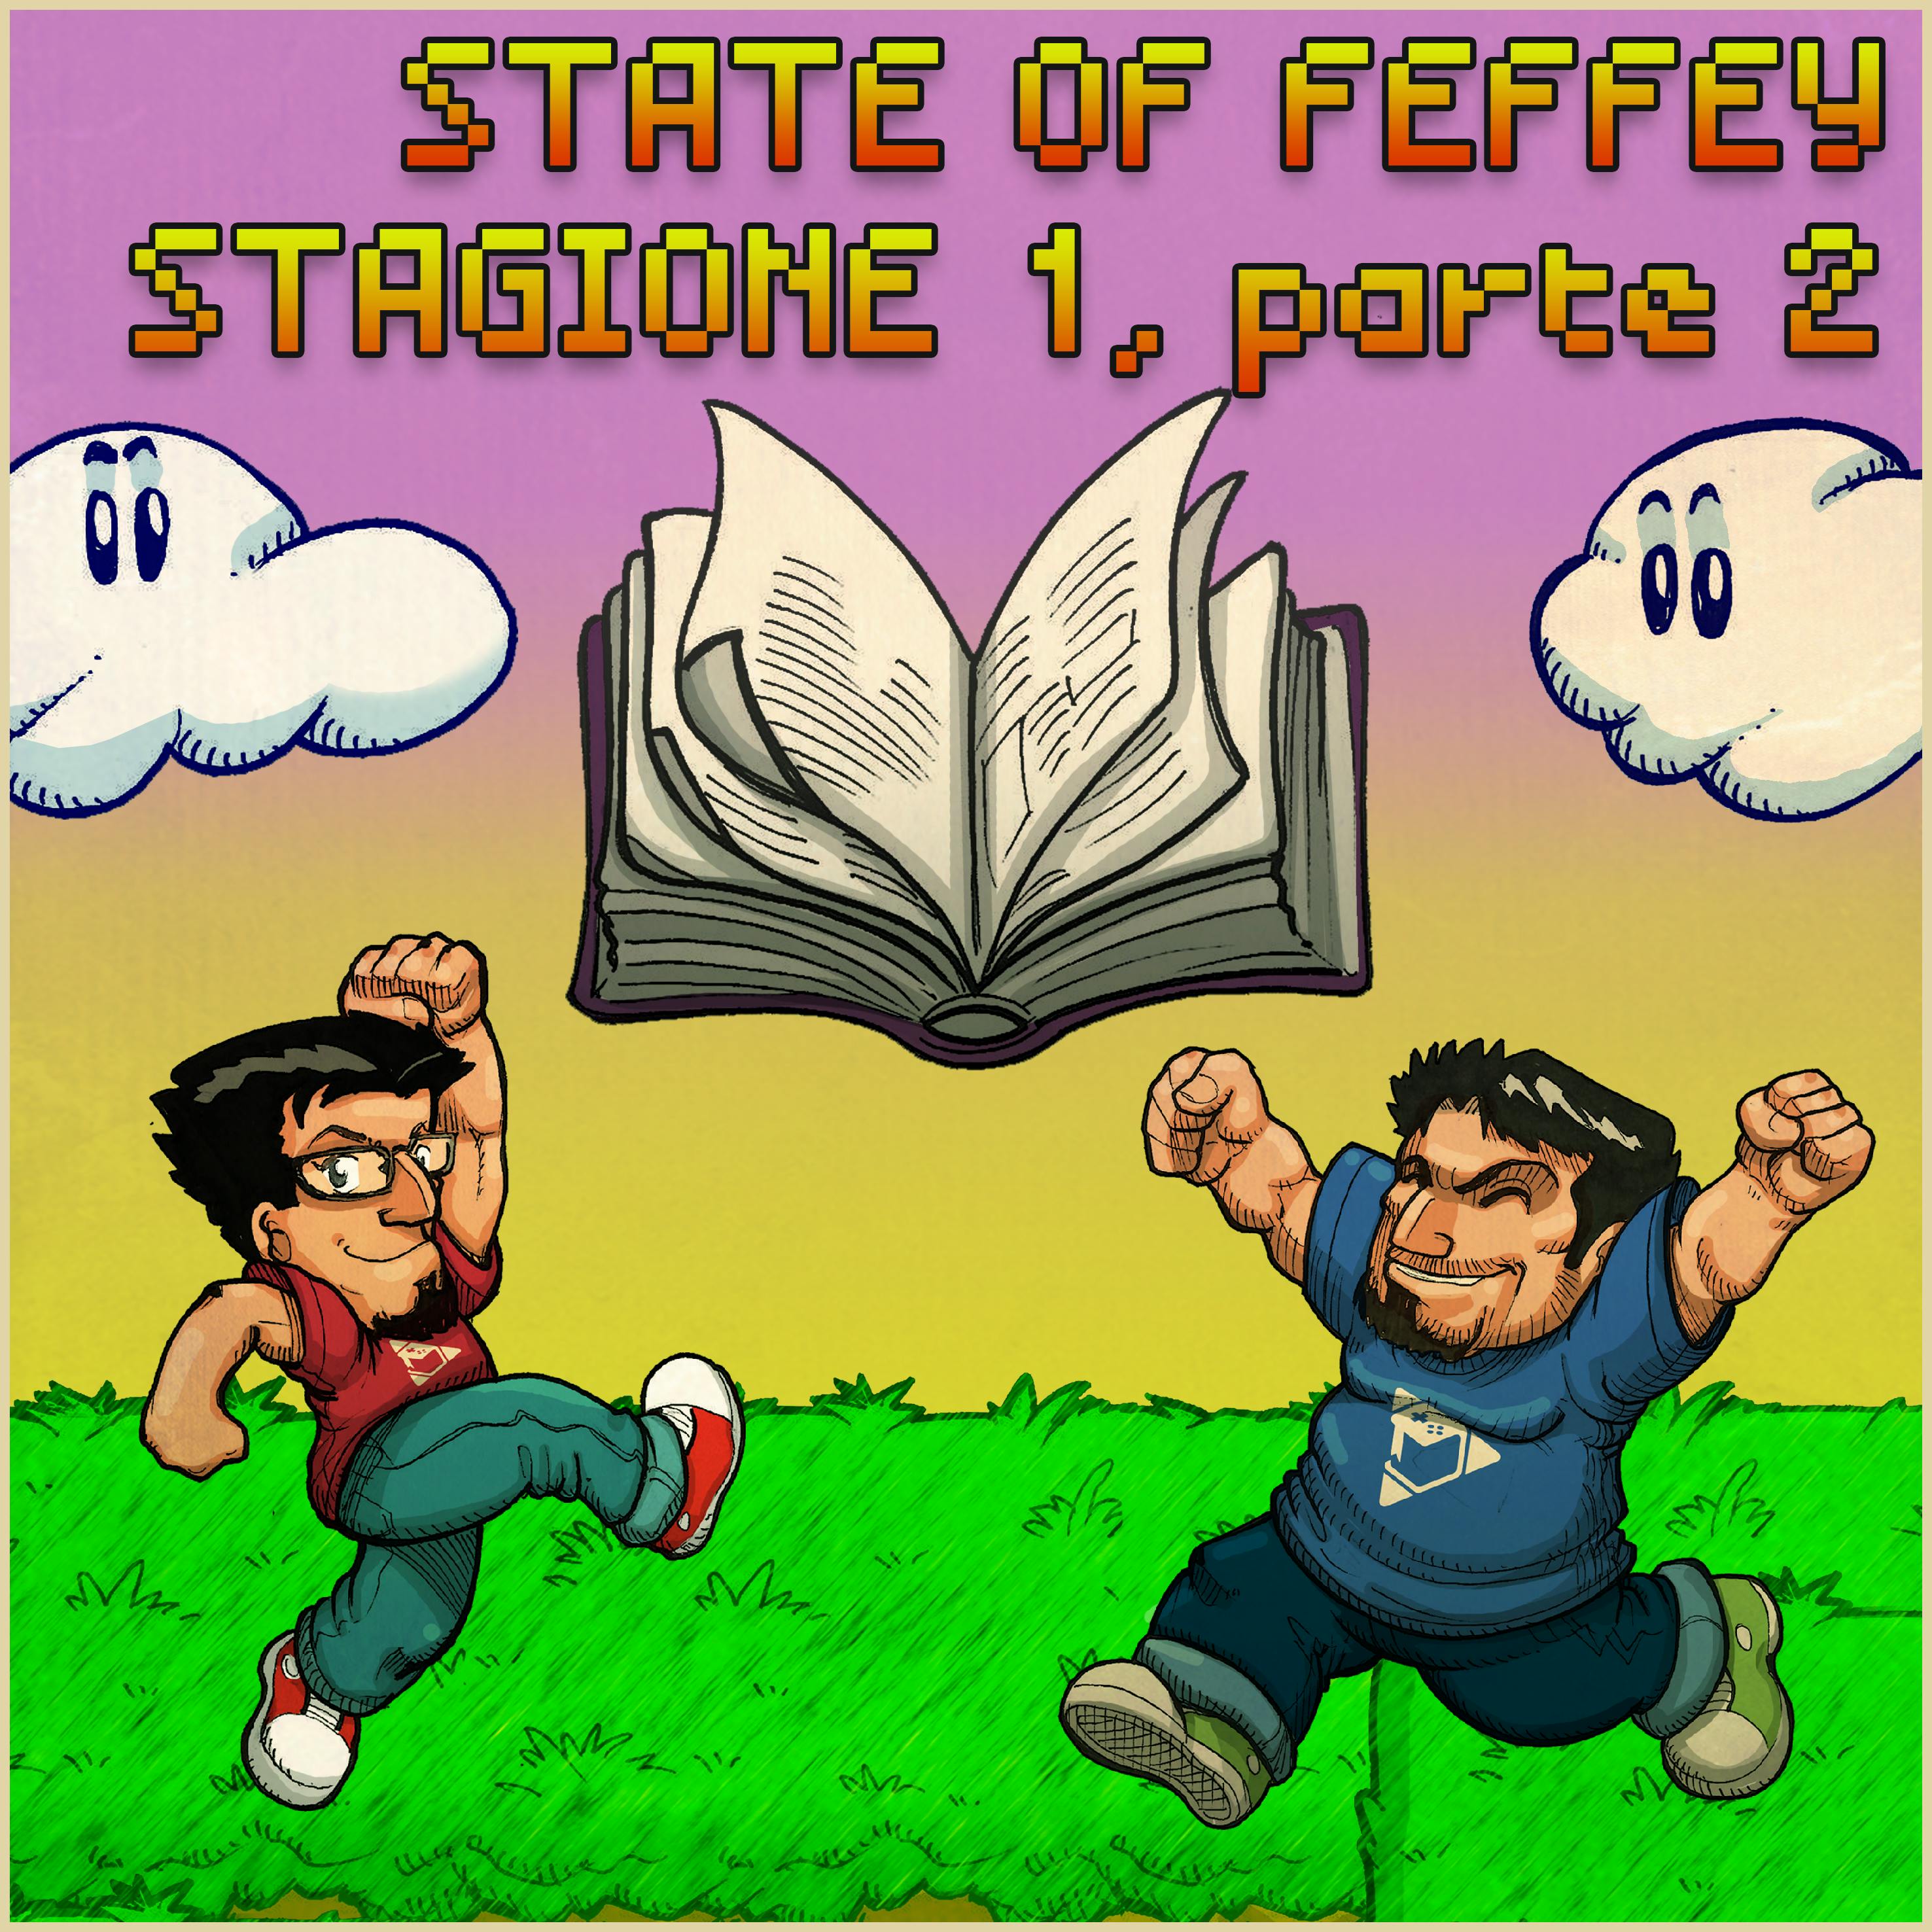 State of Feffey: Stagione 1, parte 2